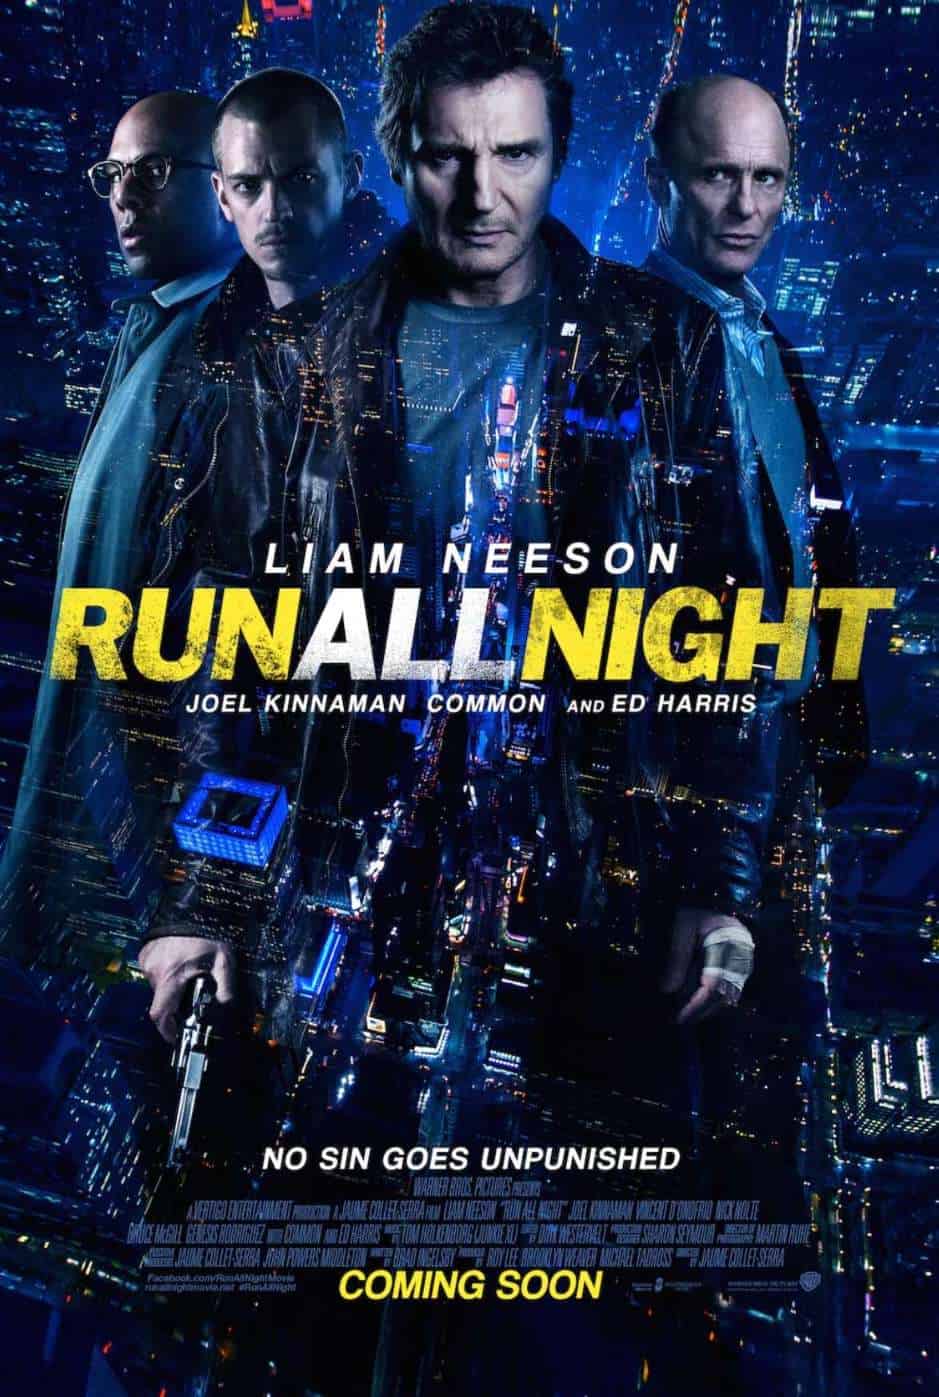 Taken like movies Run All Night (2015)